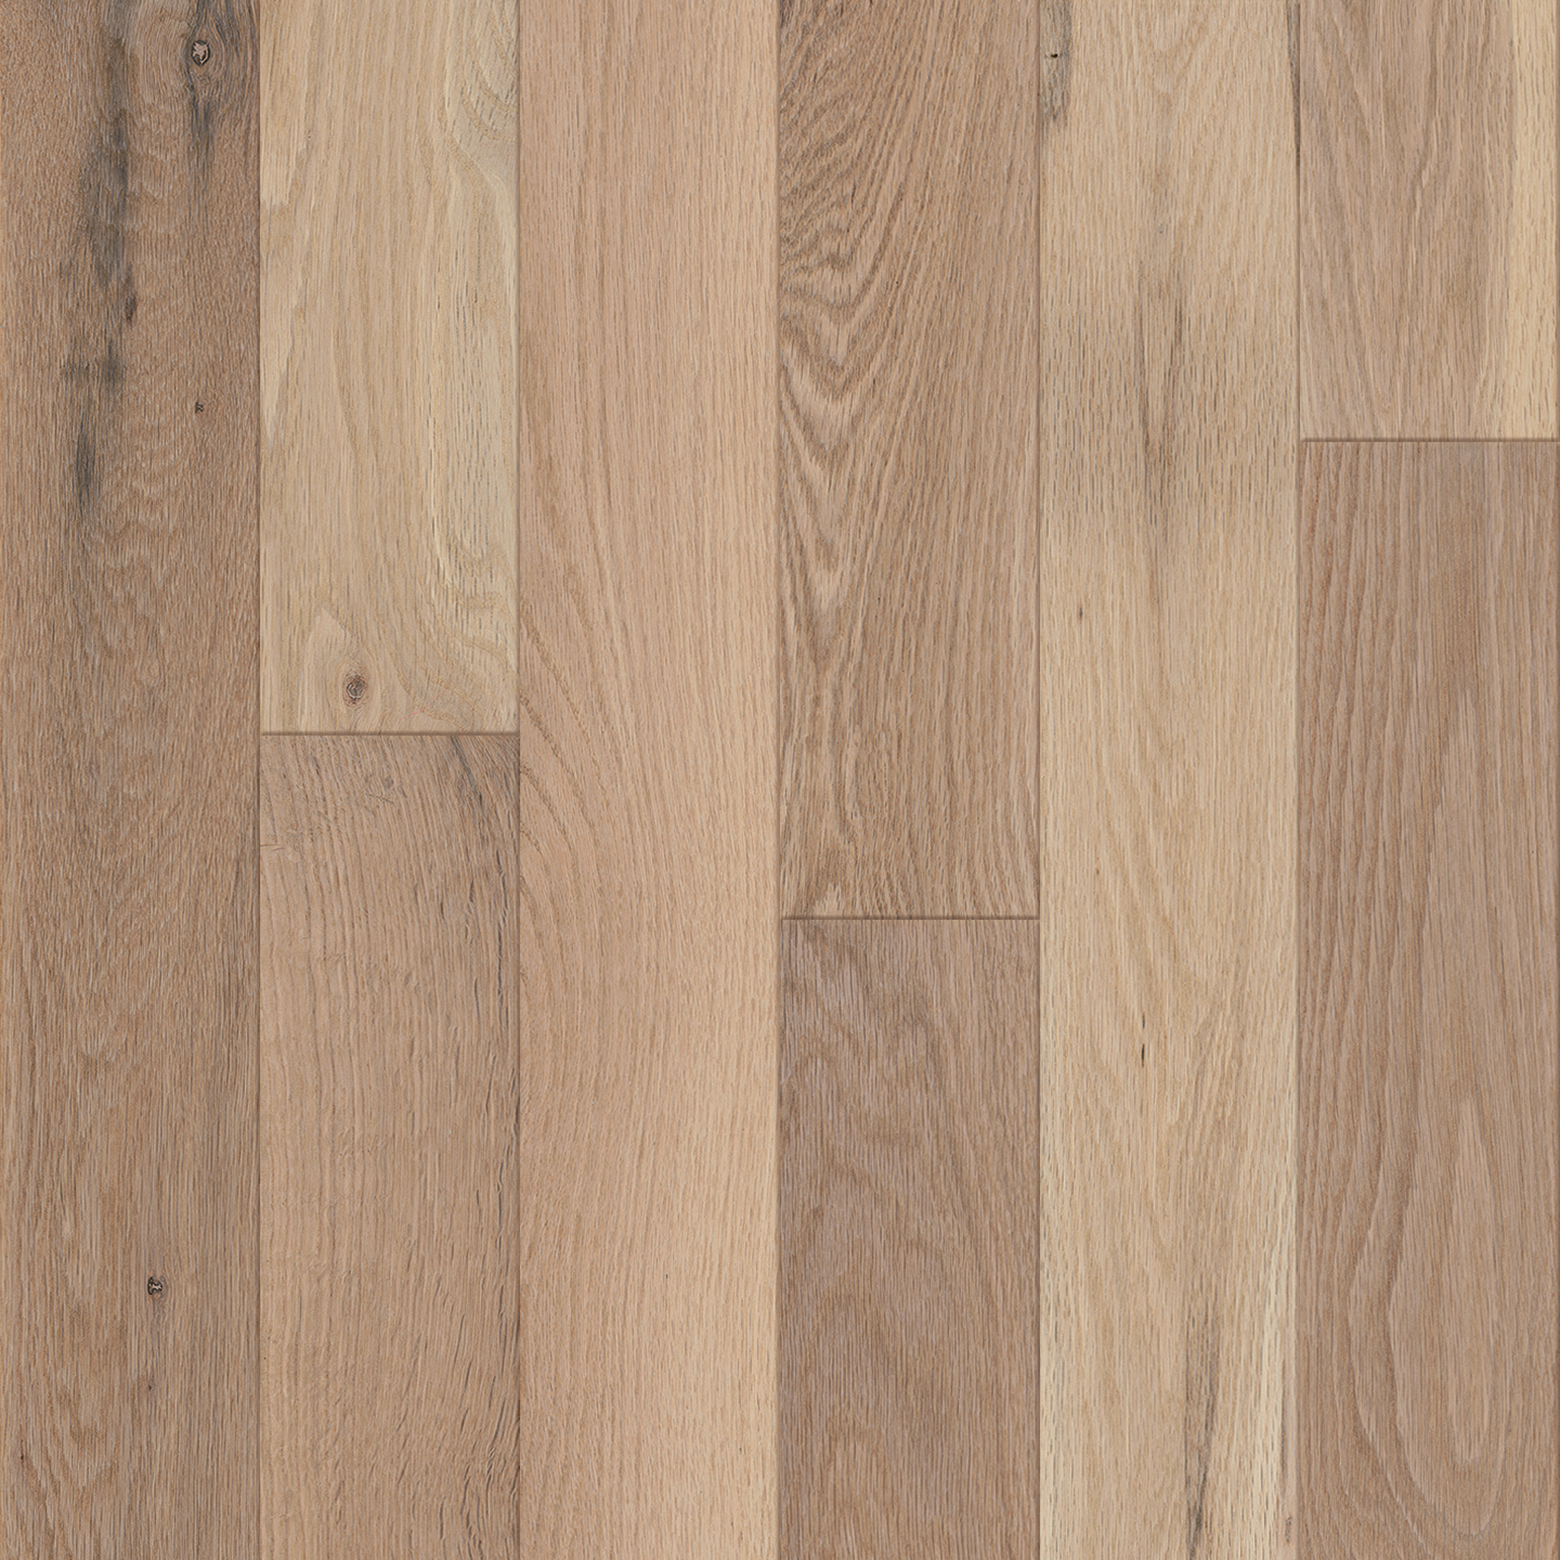 Oak Solid Hardwood Cb4230lg, Bruce Hardwood Floor Polish